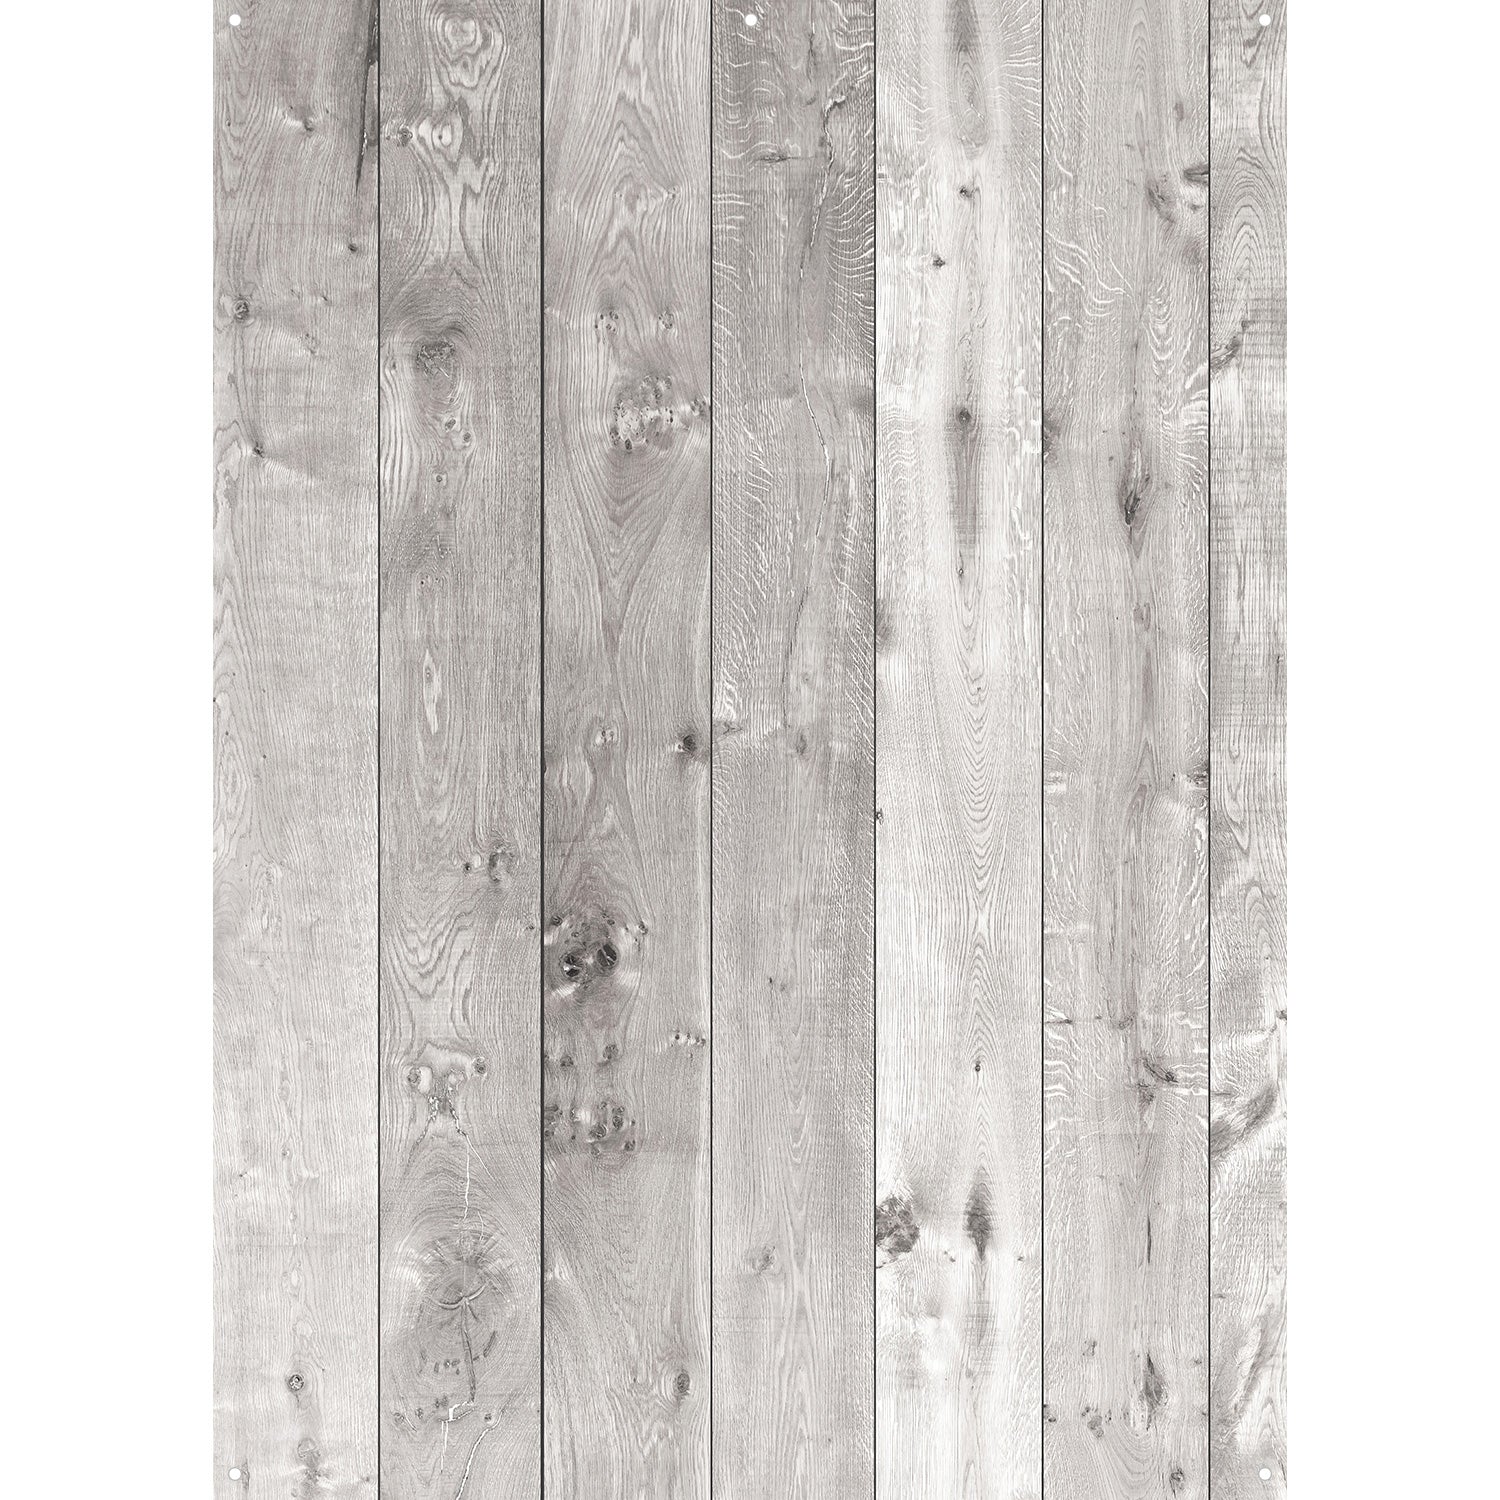 D0056-GY - X-Drop Backdrop – Gray Wood Plank Panels (5' x 7') - X-Drop Backdrop – Gray Wood Plank Panels (5' x 7') - D0056-GY - X-Drop Backdrop – Gray Wood Plank Panels (5' x 7')